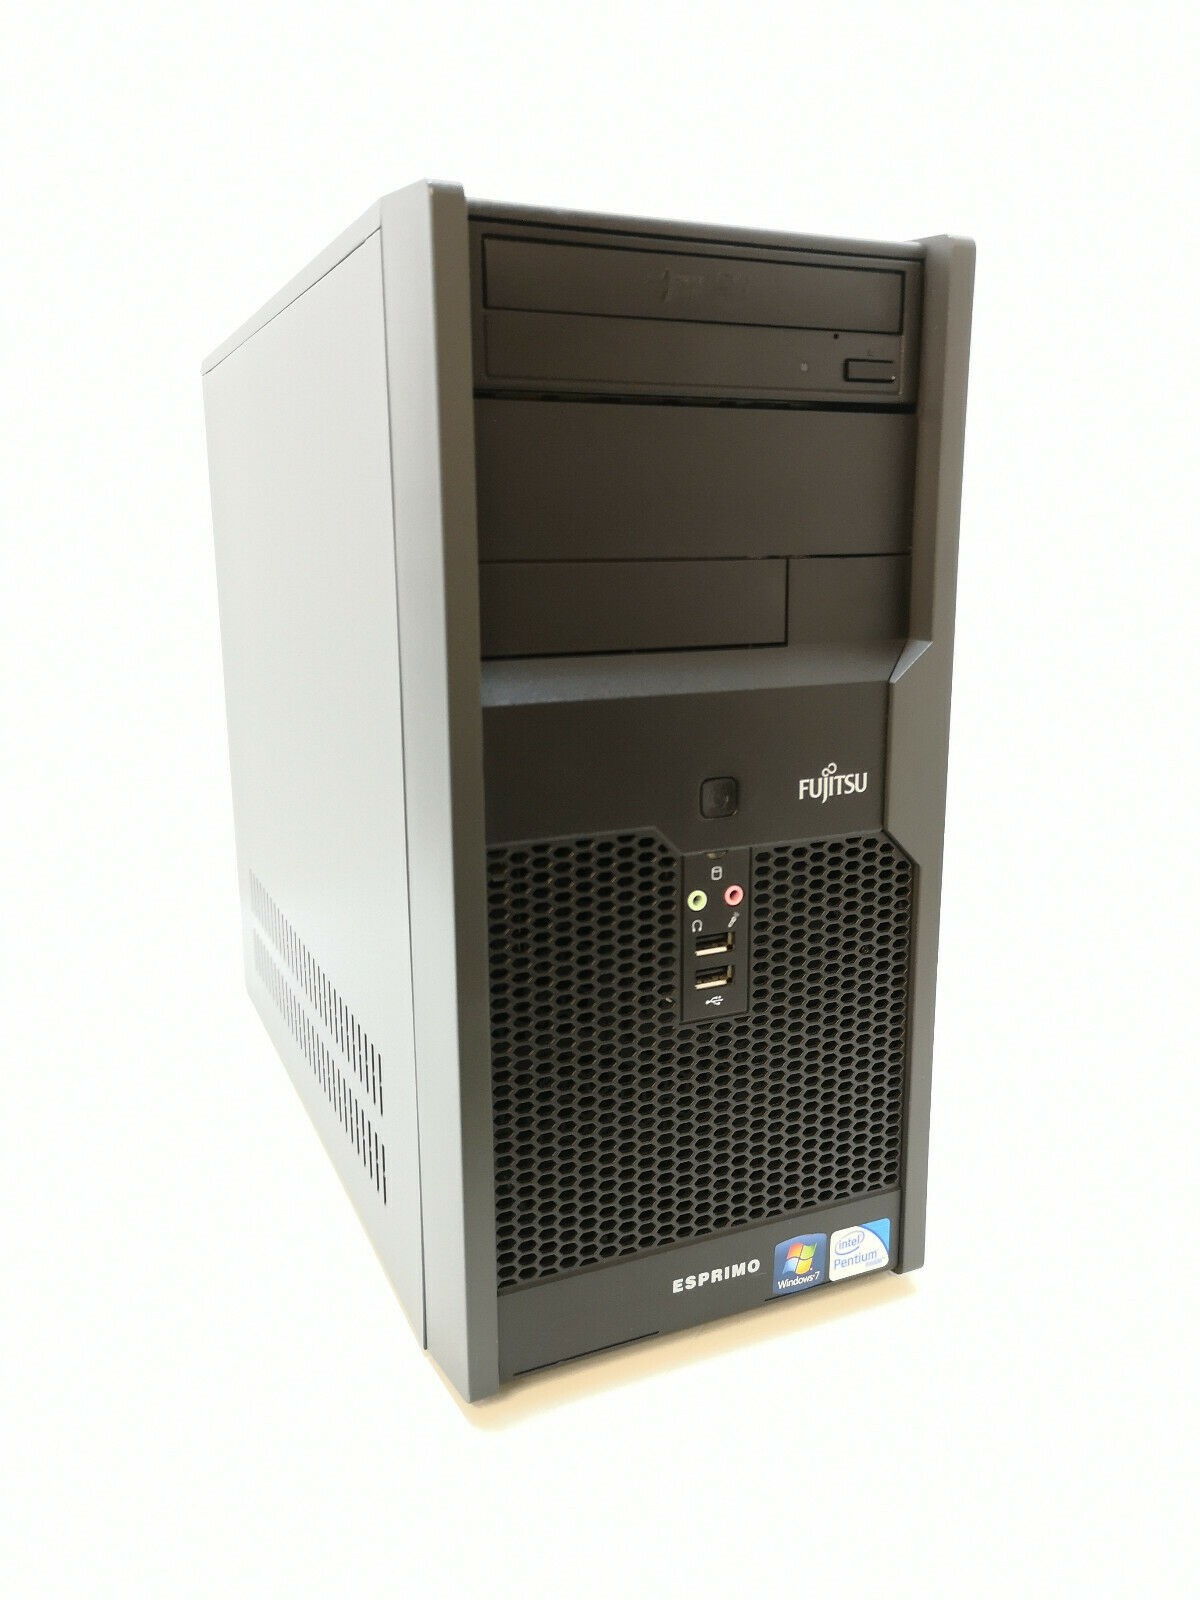 Refurbished Fujitsu Esprimo P2560 Desktop Tower PC